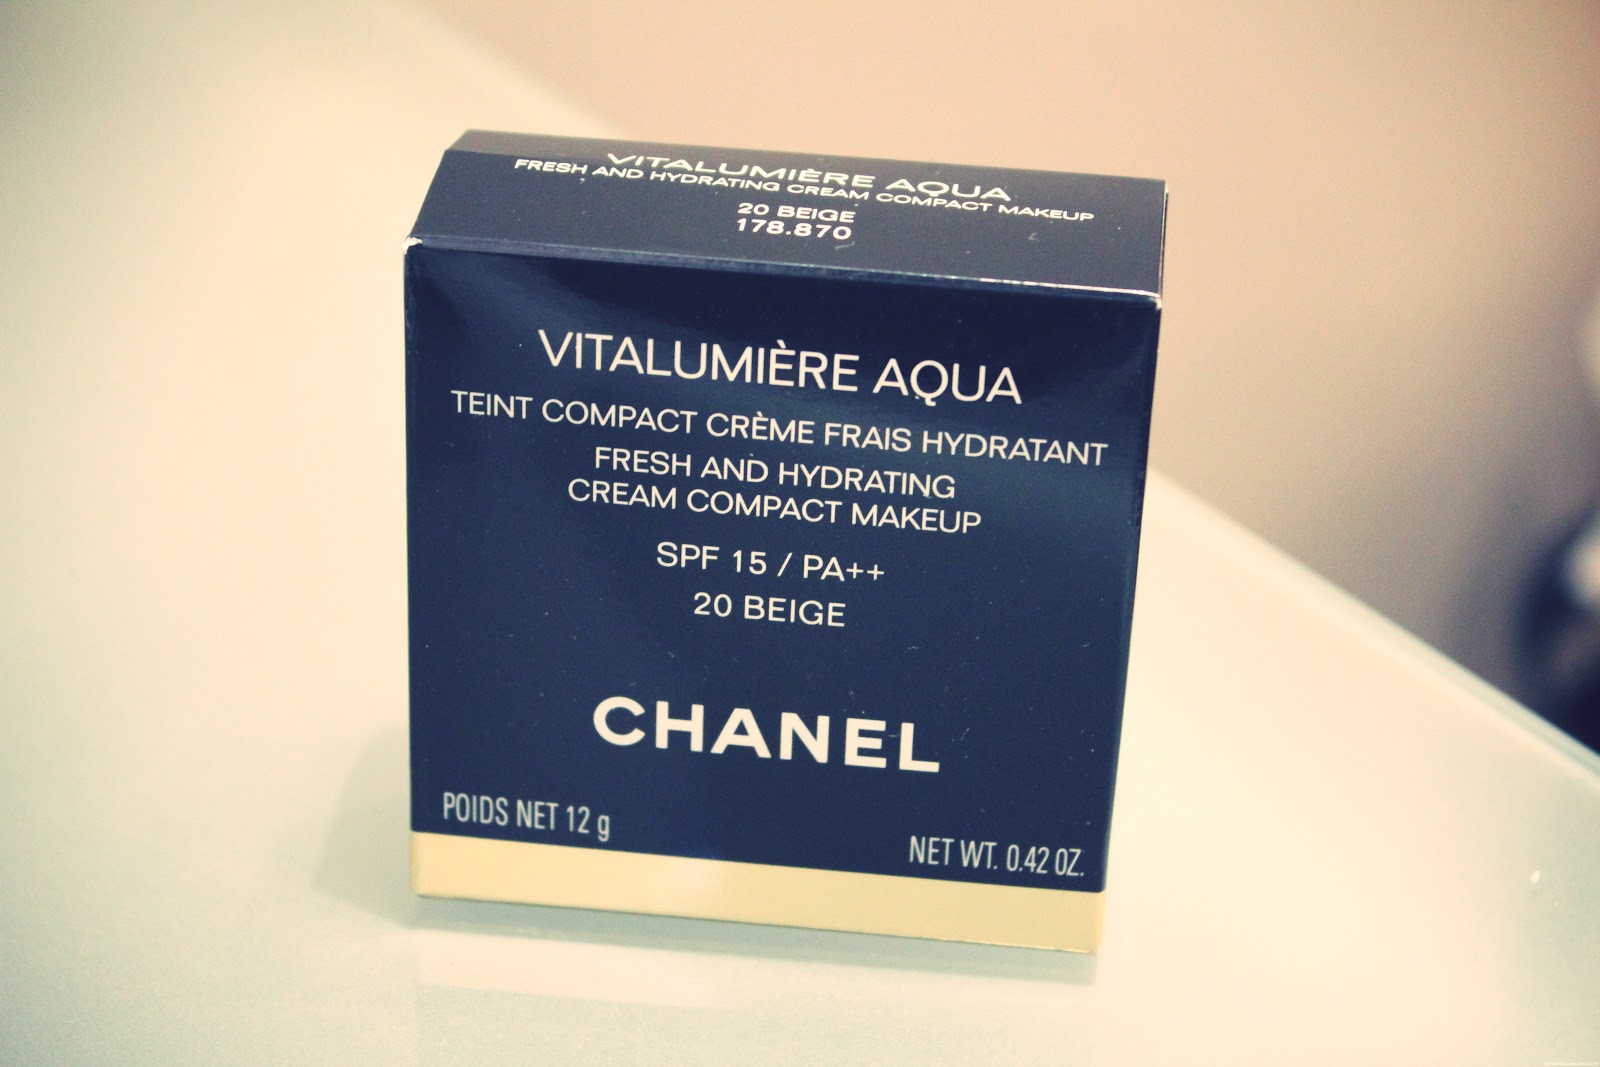 CHANEL Vitalumiere Aqua Fresh and Hydrating Cream Compact Makeup